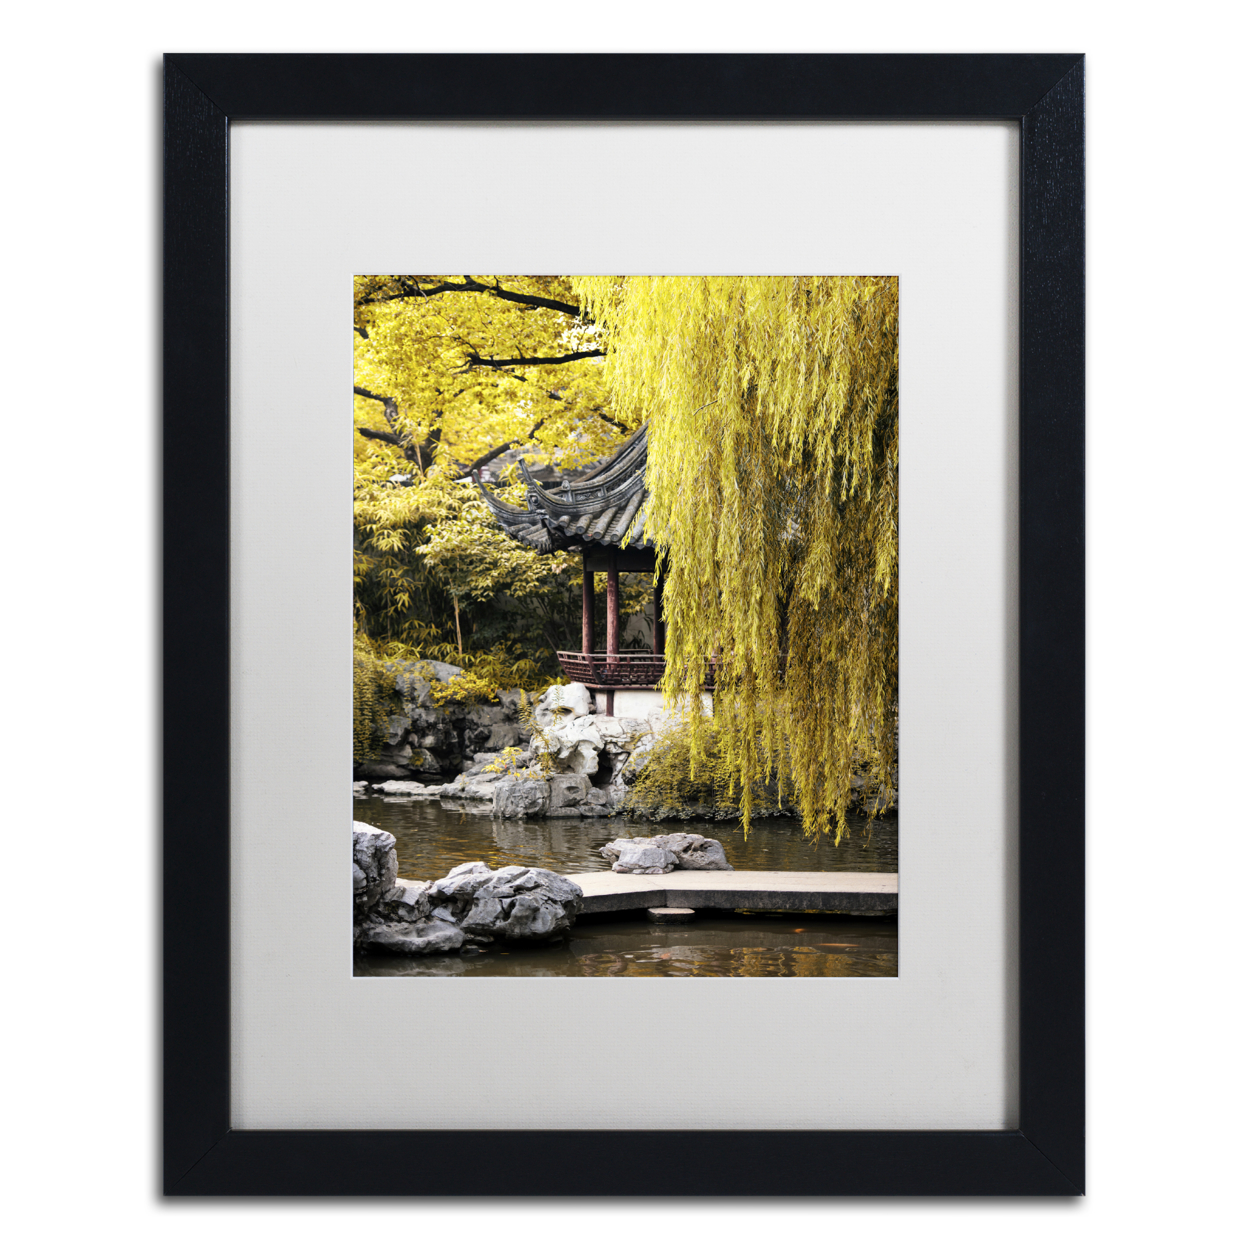 Philippe Hugonnard 'Golden Lake' Black Wooden Framed Art 18 X 22 Inches